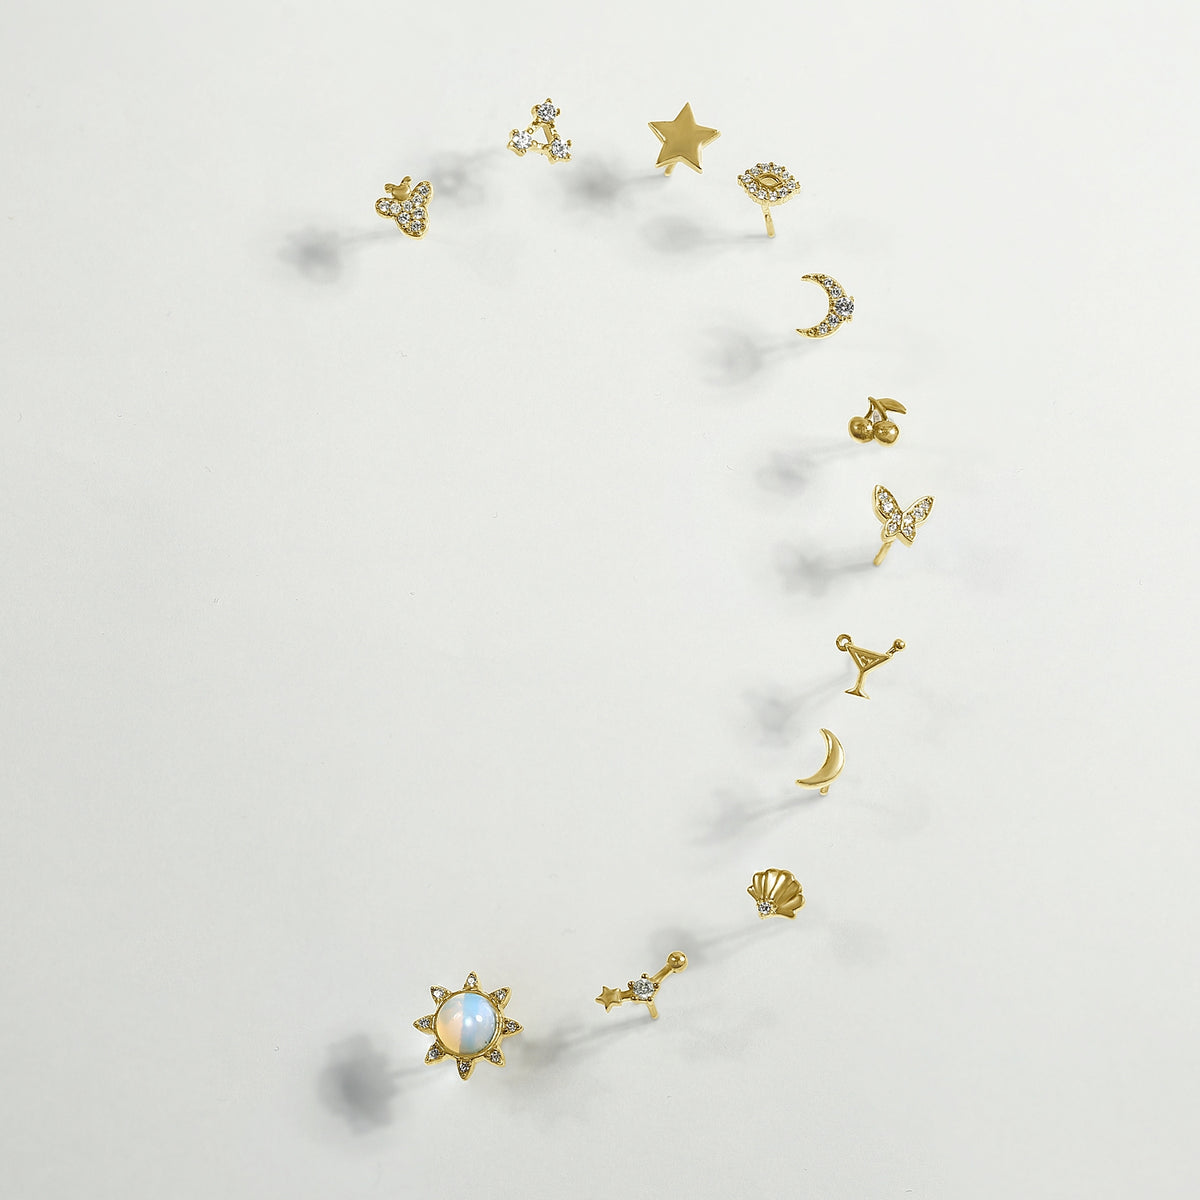 Seashells, Bumble Bee and Crescent Moon Earrings Set